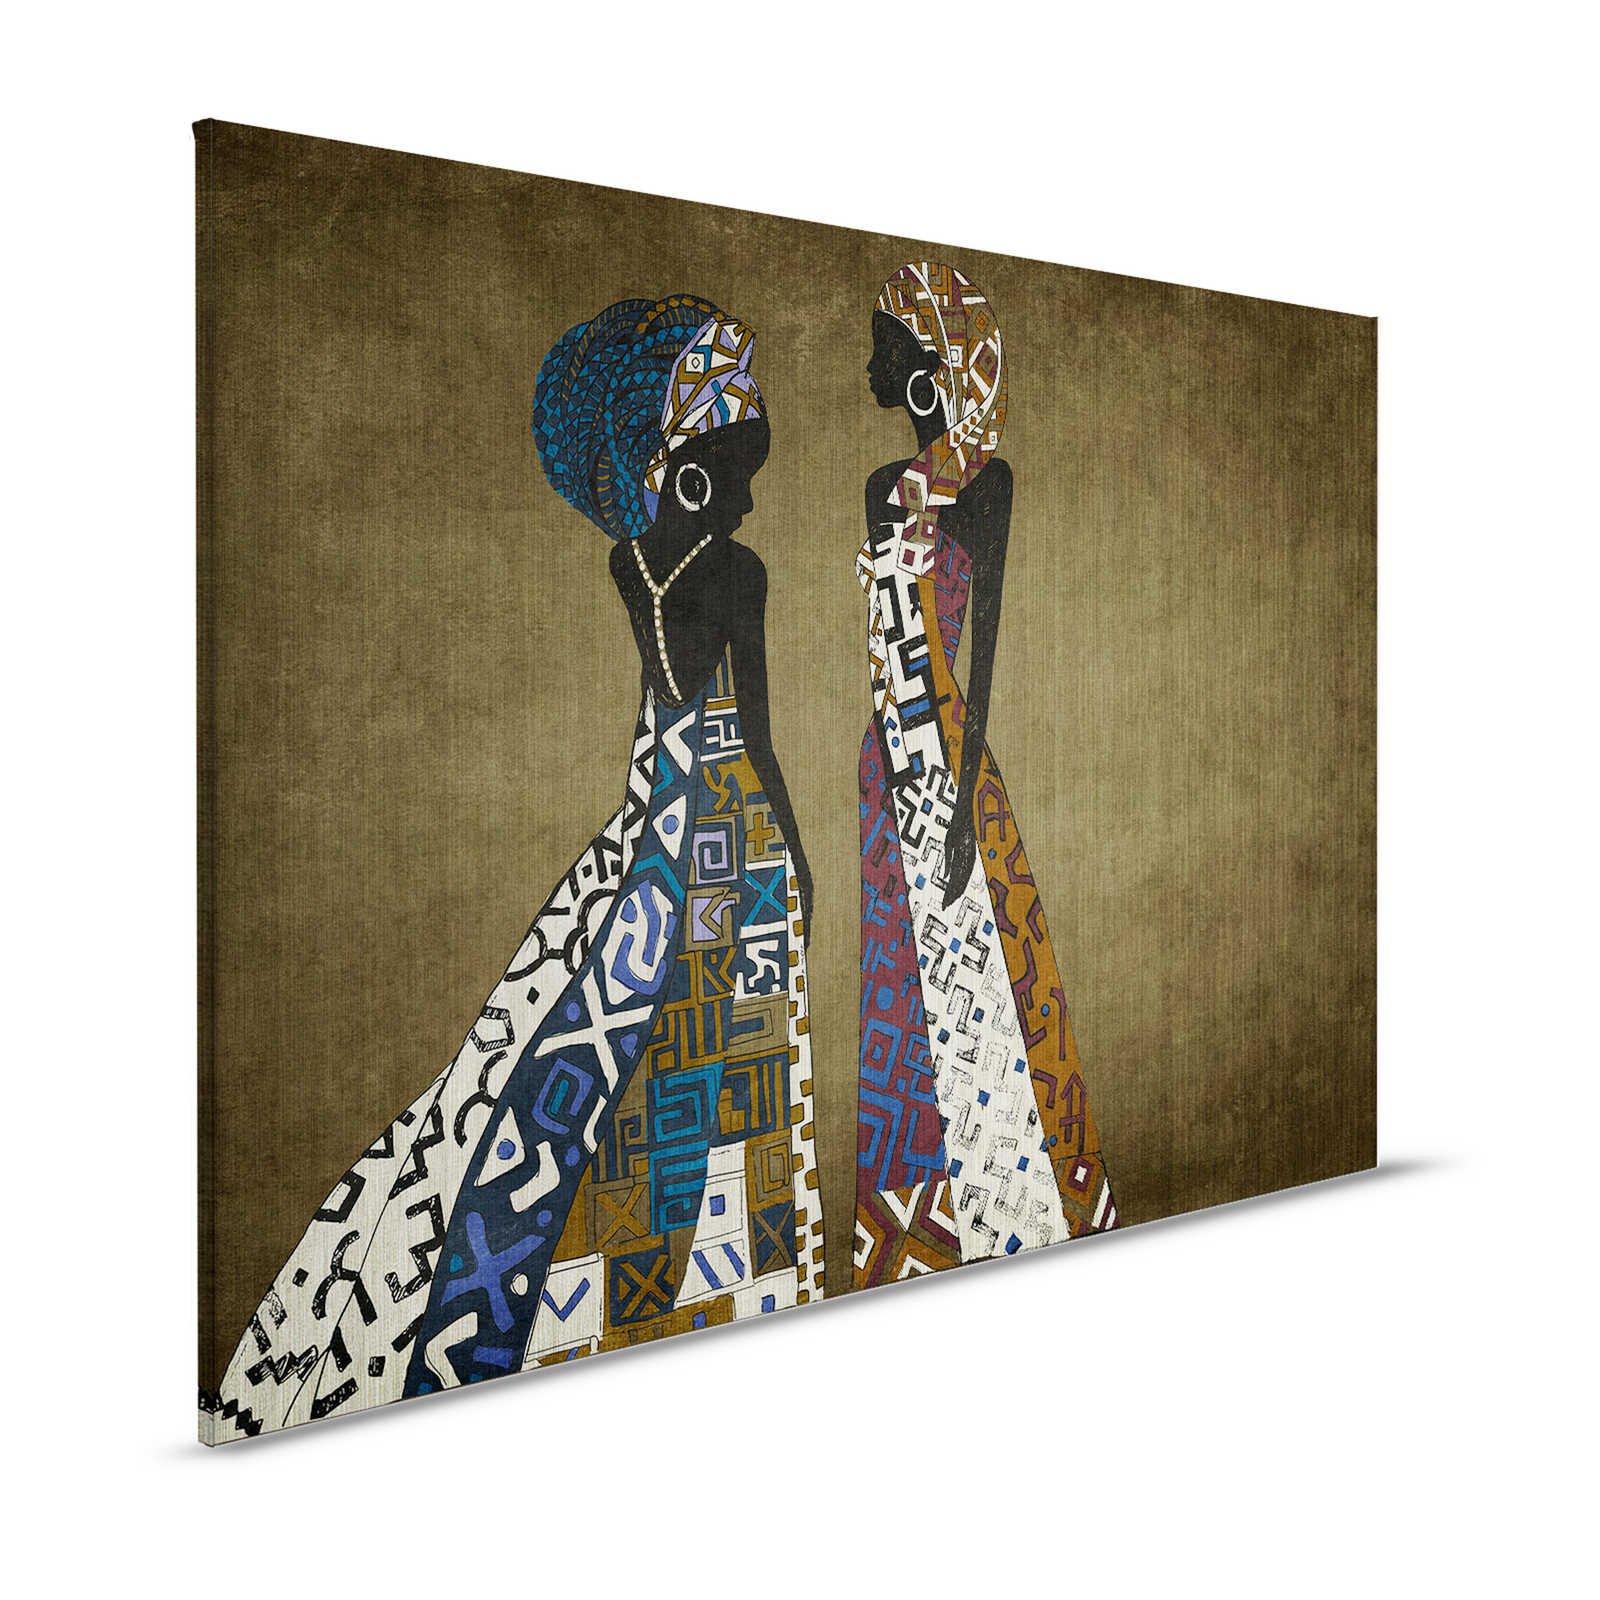             Nairobi 3 - Africa Cuadro sobre lienzo Vestido de diseño con motivos étnicos - 1,20 m x 0,80 m
        